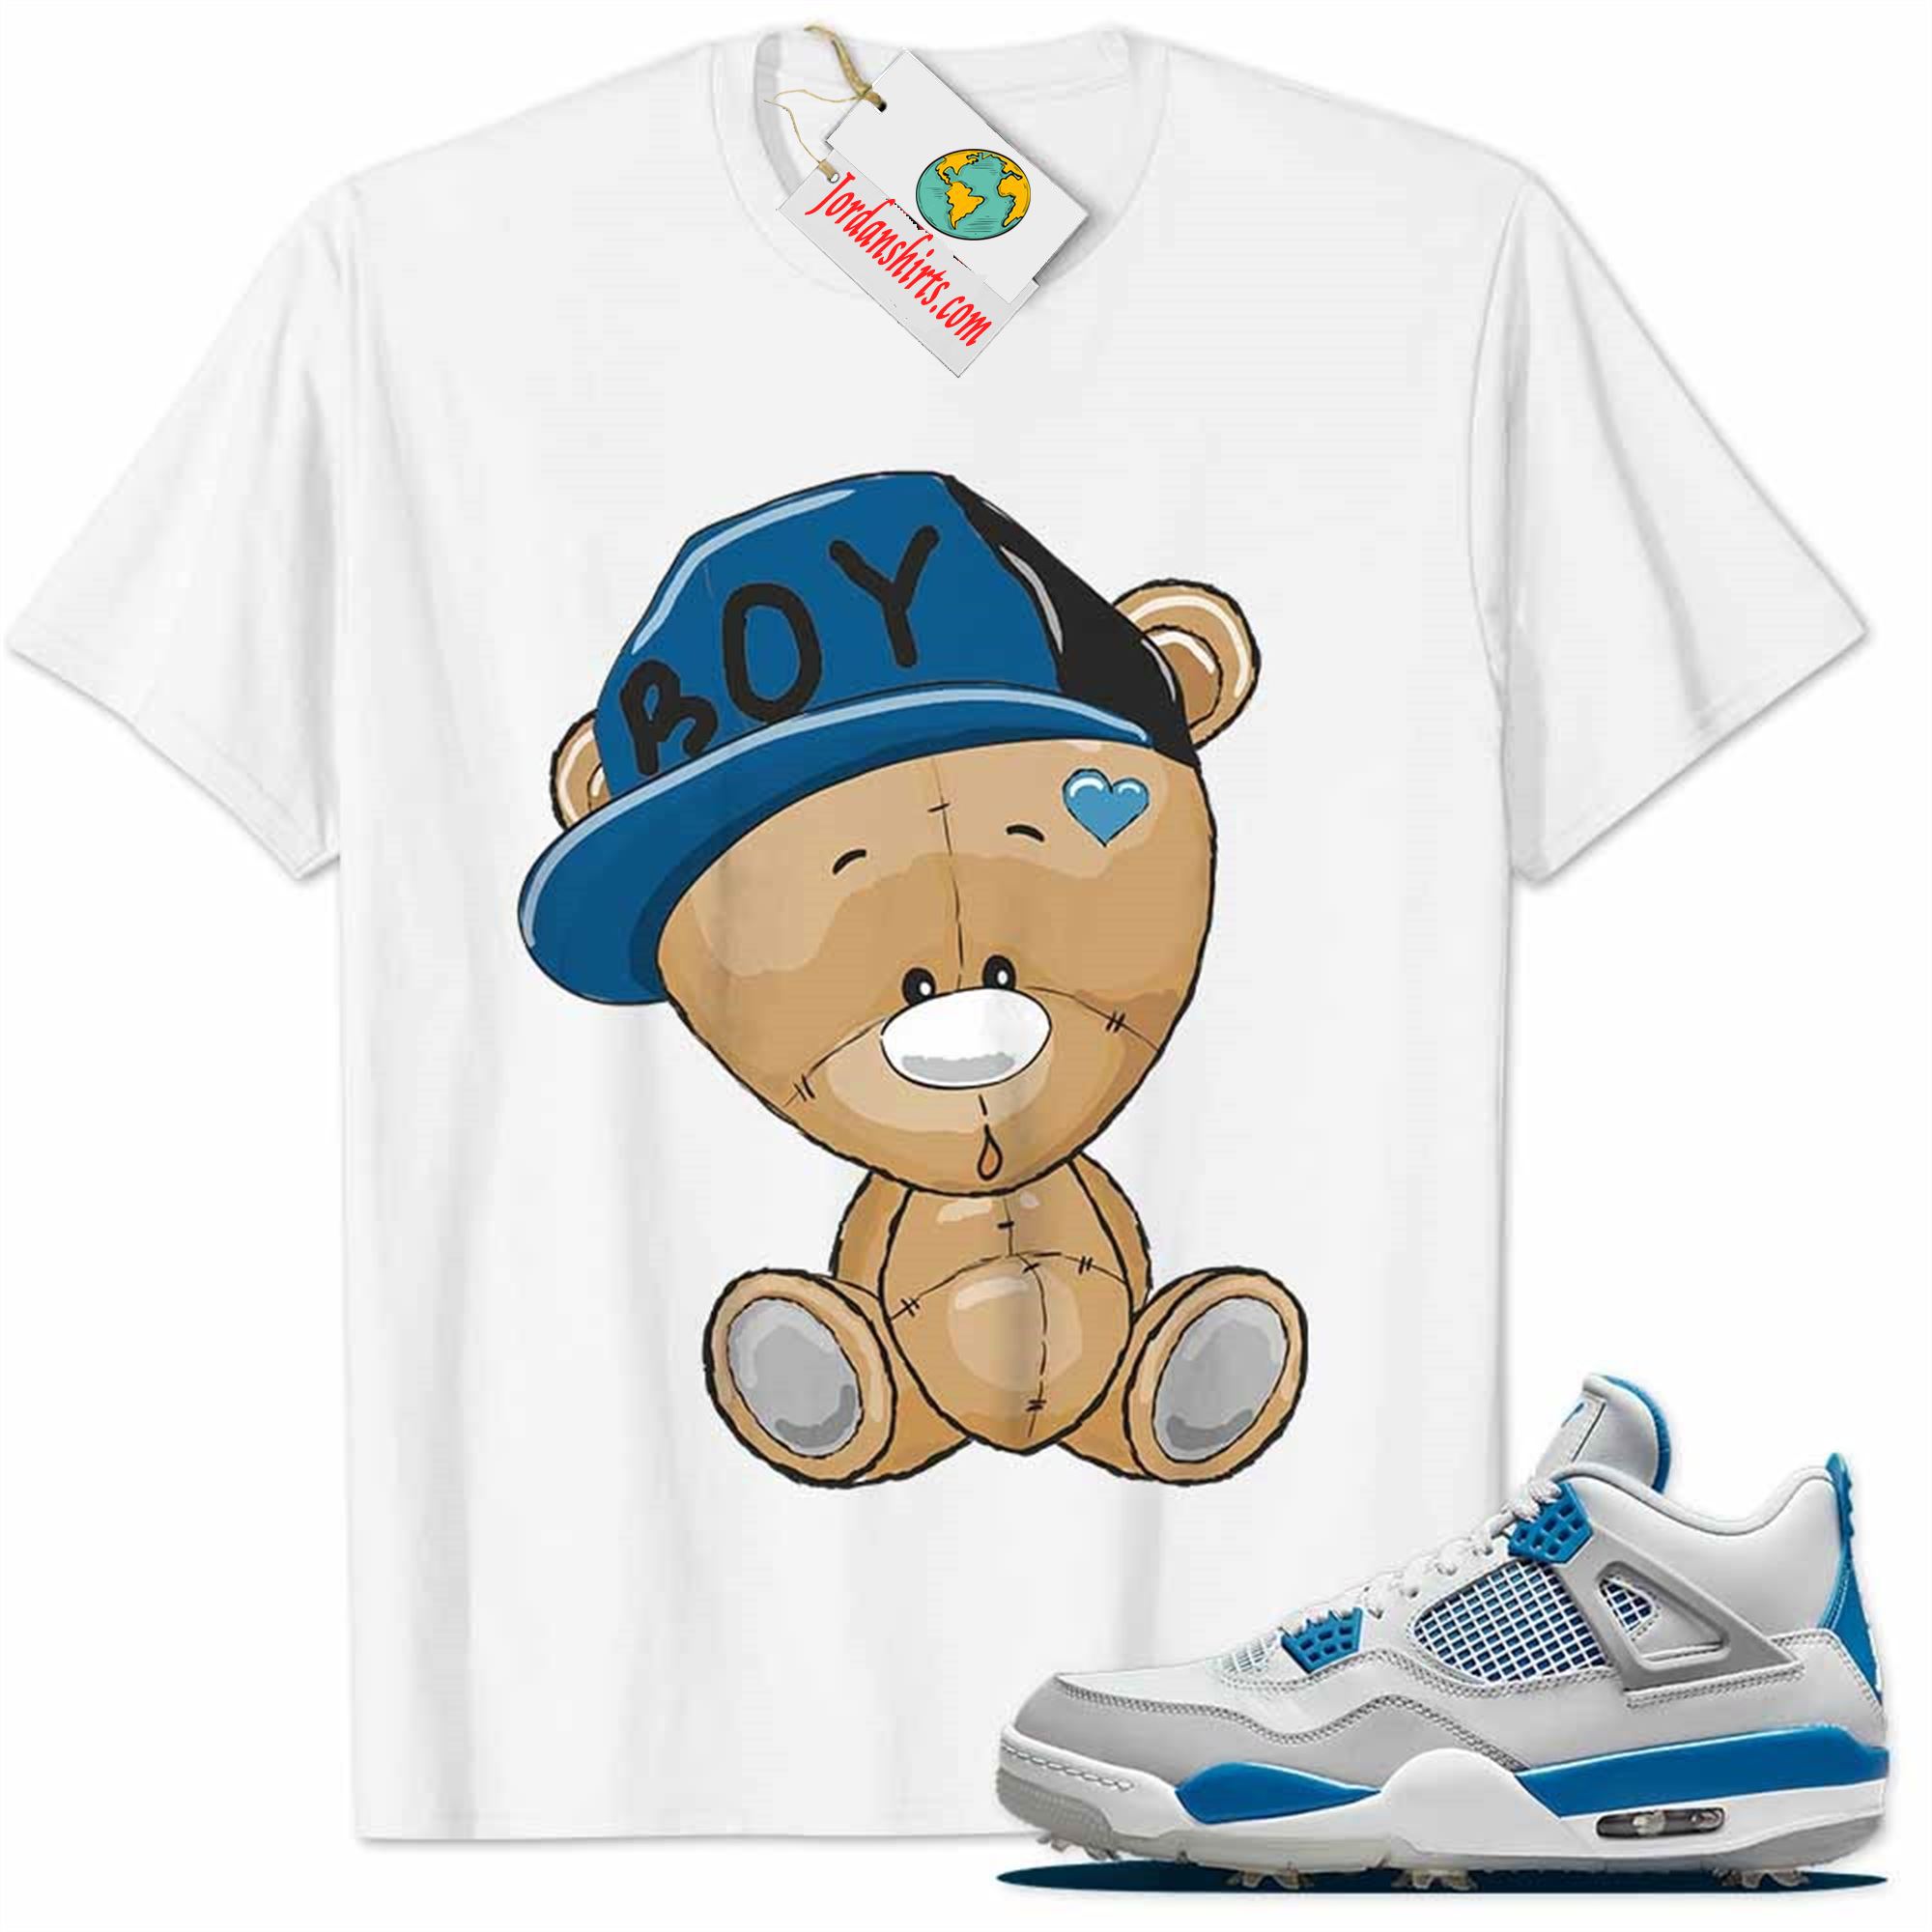 Jordan 4 Shirt, Jordan 4 Golf Military Blue Shirt Cute Baby Teddy Bear White Size Up To 5xl